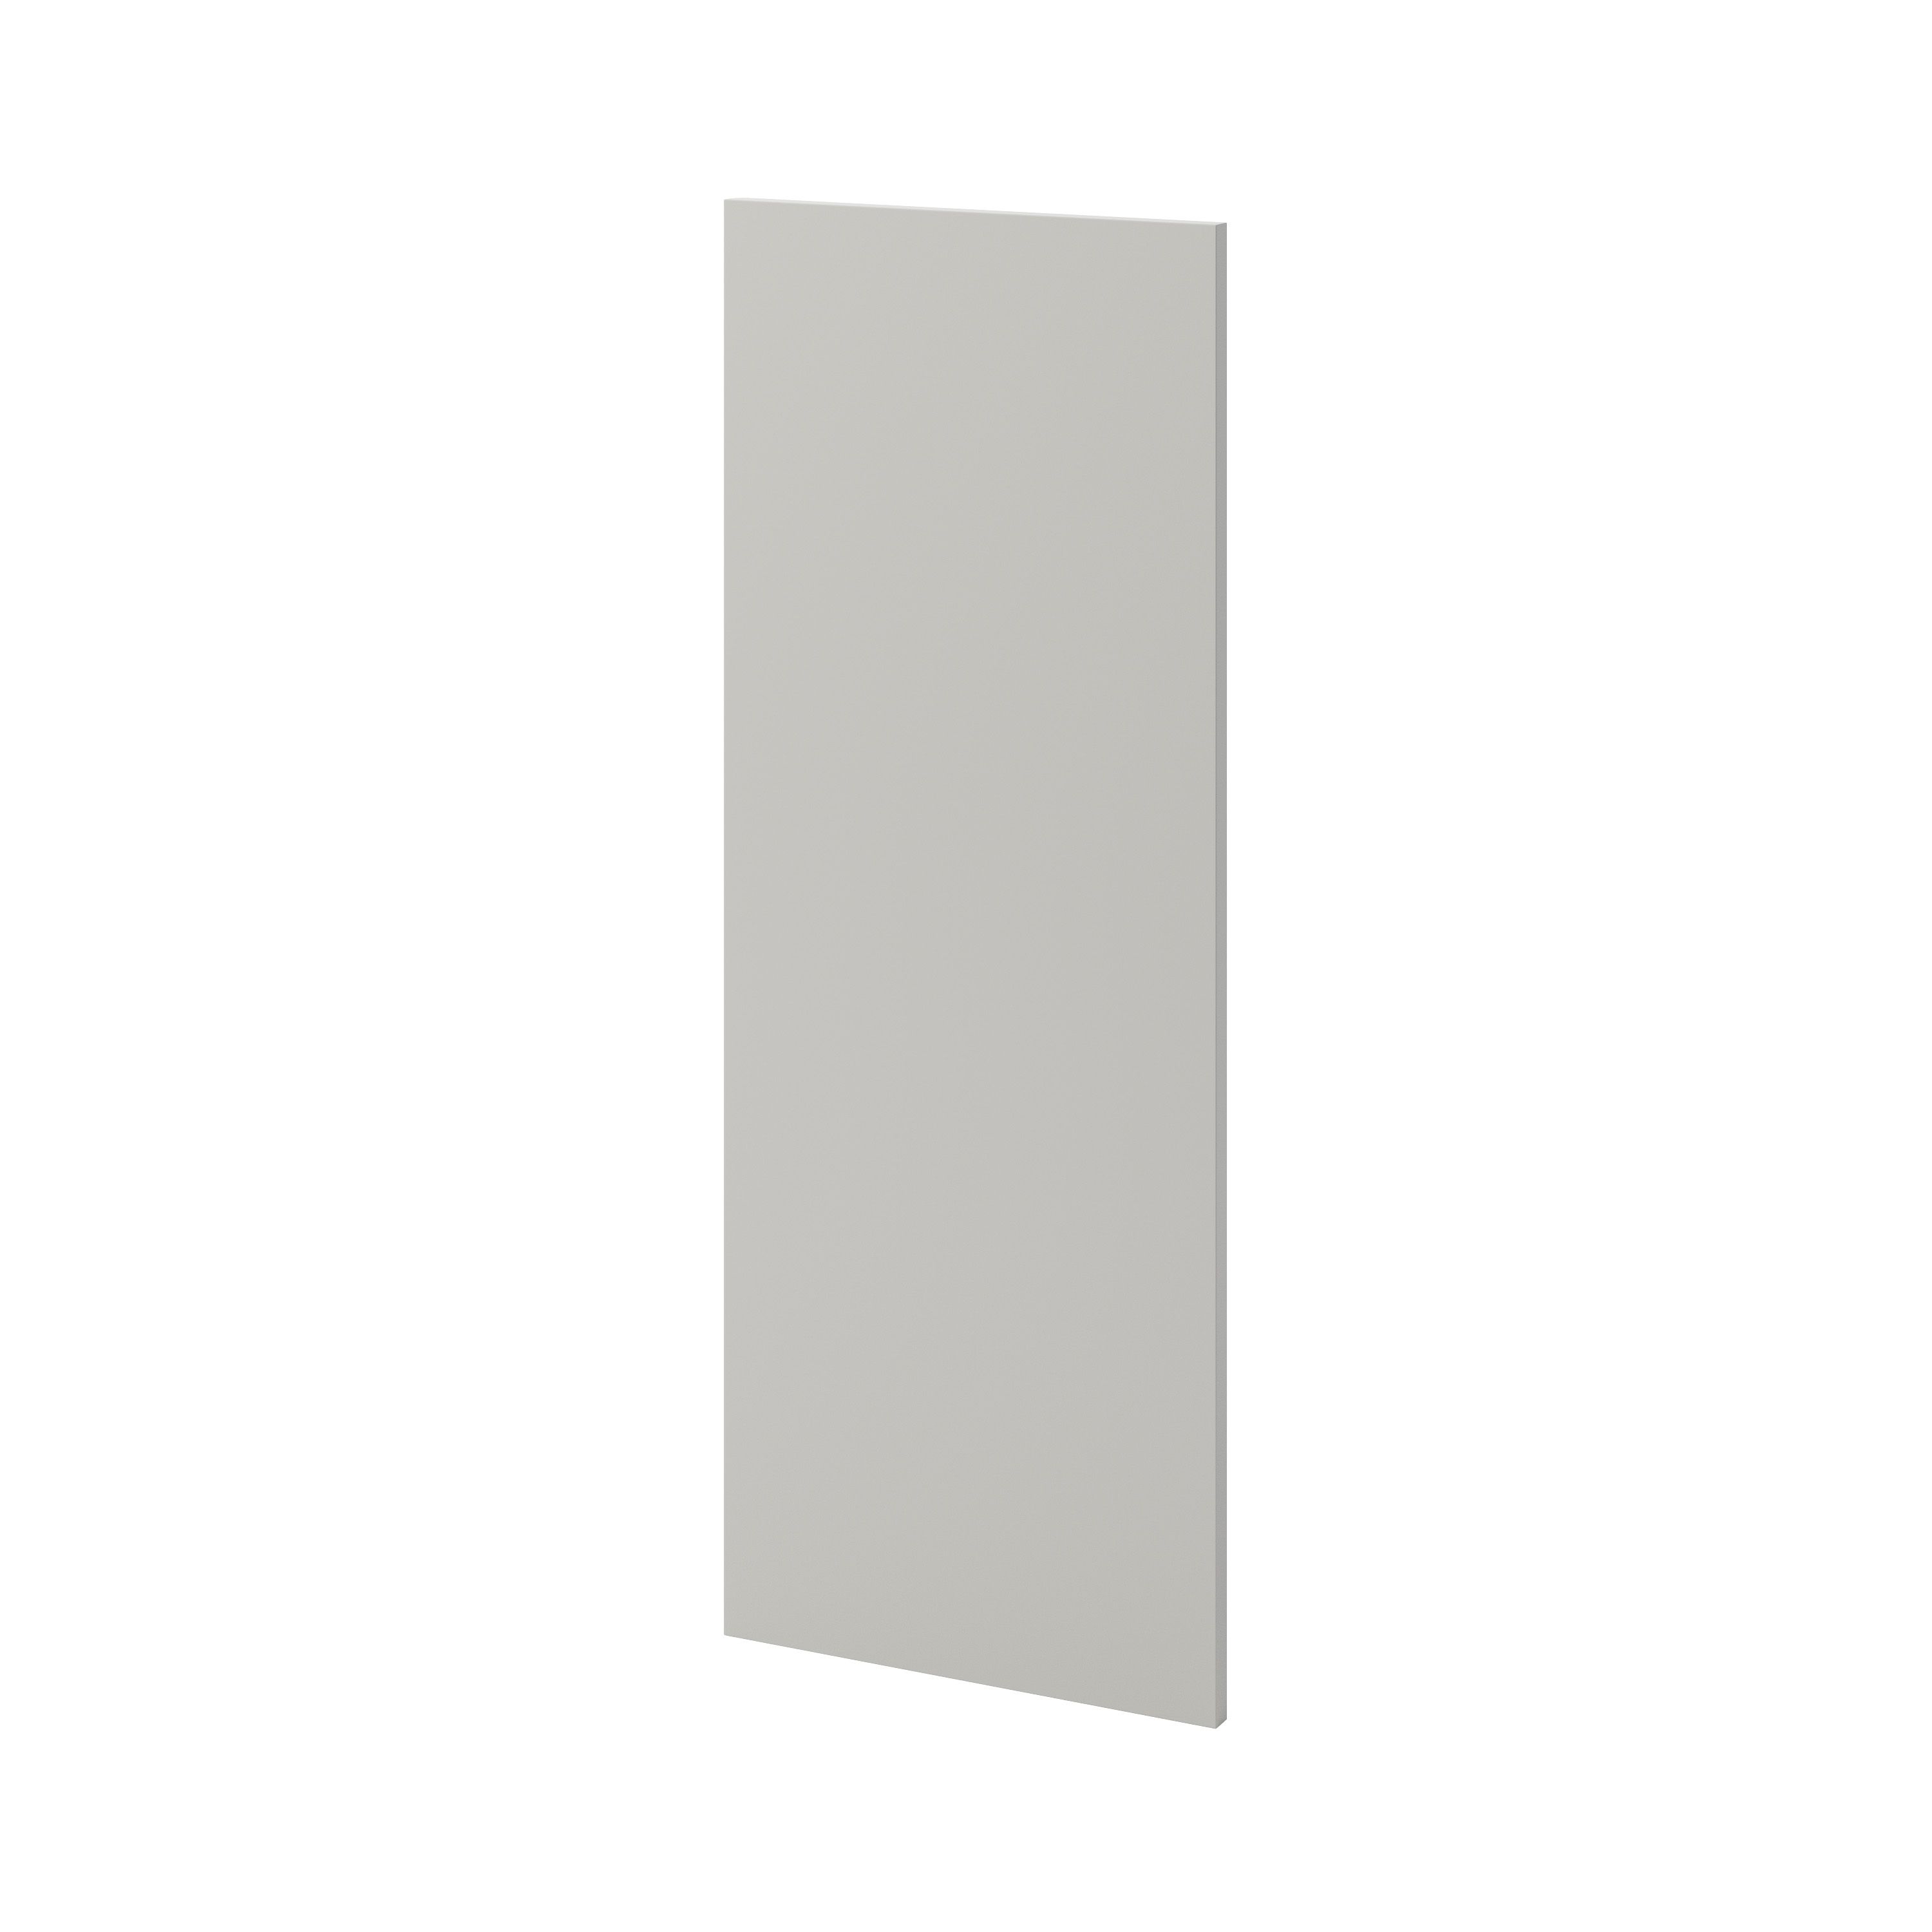 GoodHome Stevia Matt Pewter grey slab Standard End panel (H)960mm (W)360mm